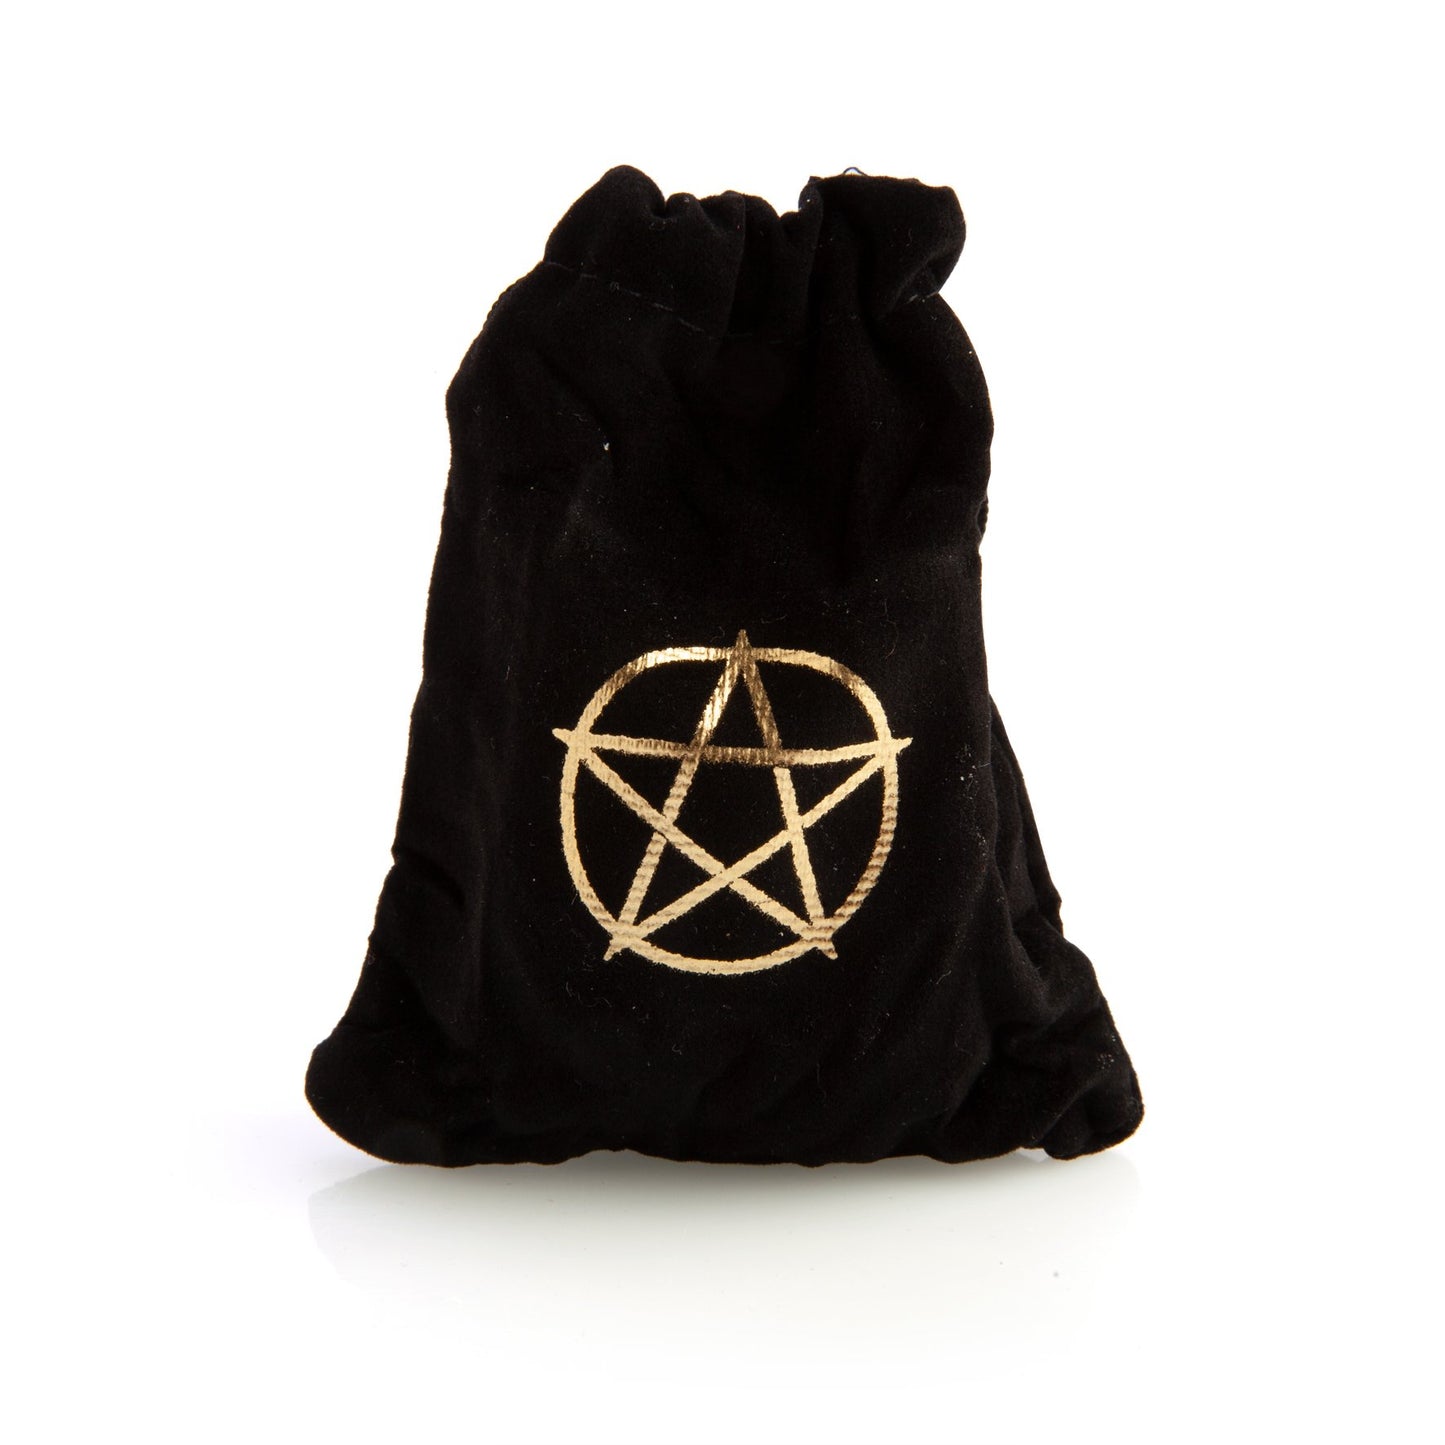 Salem’s Spell Wellness Witch Stones Kit